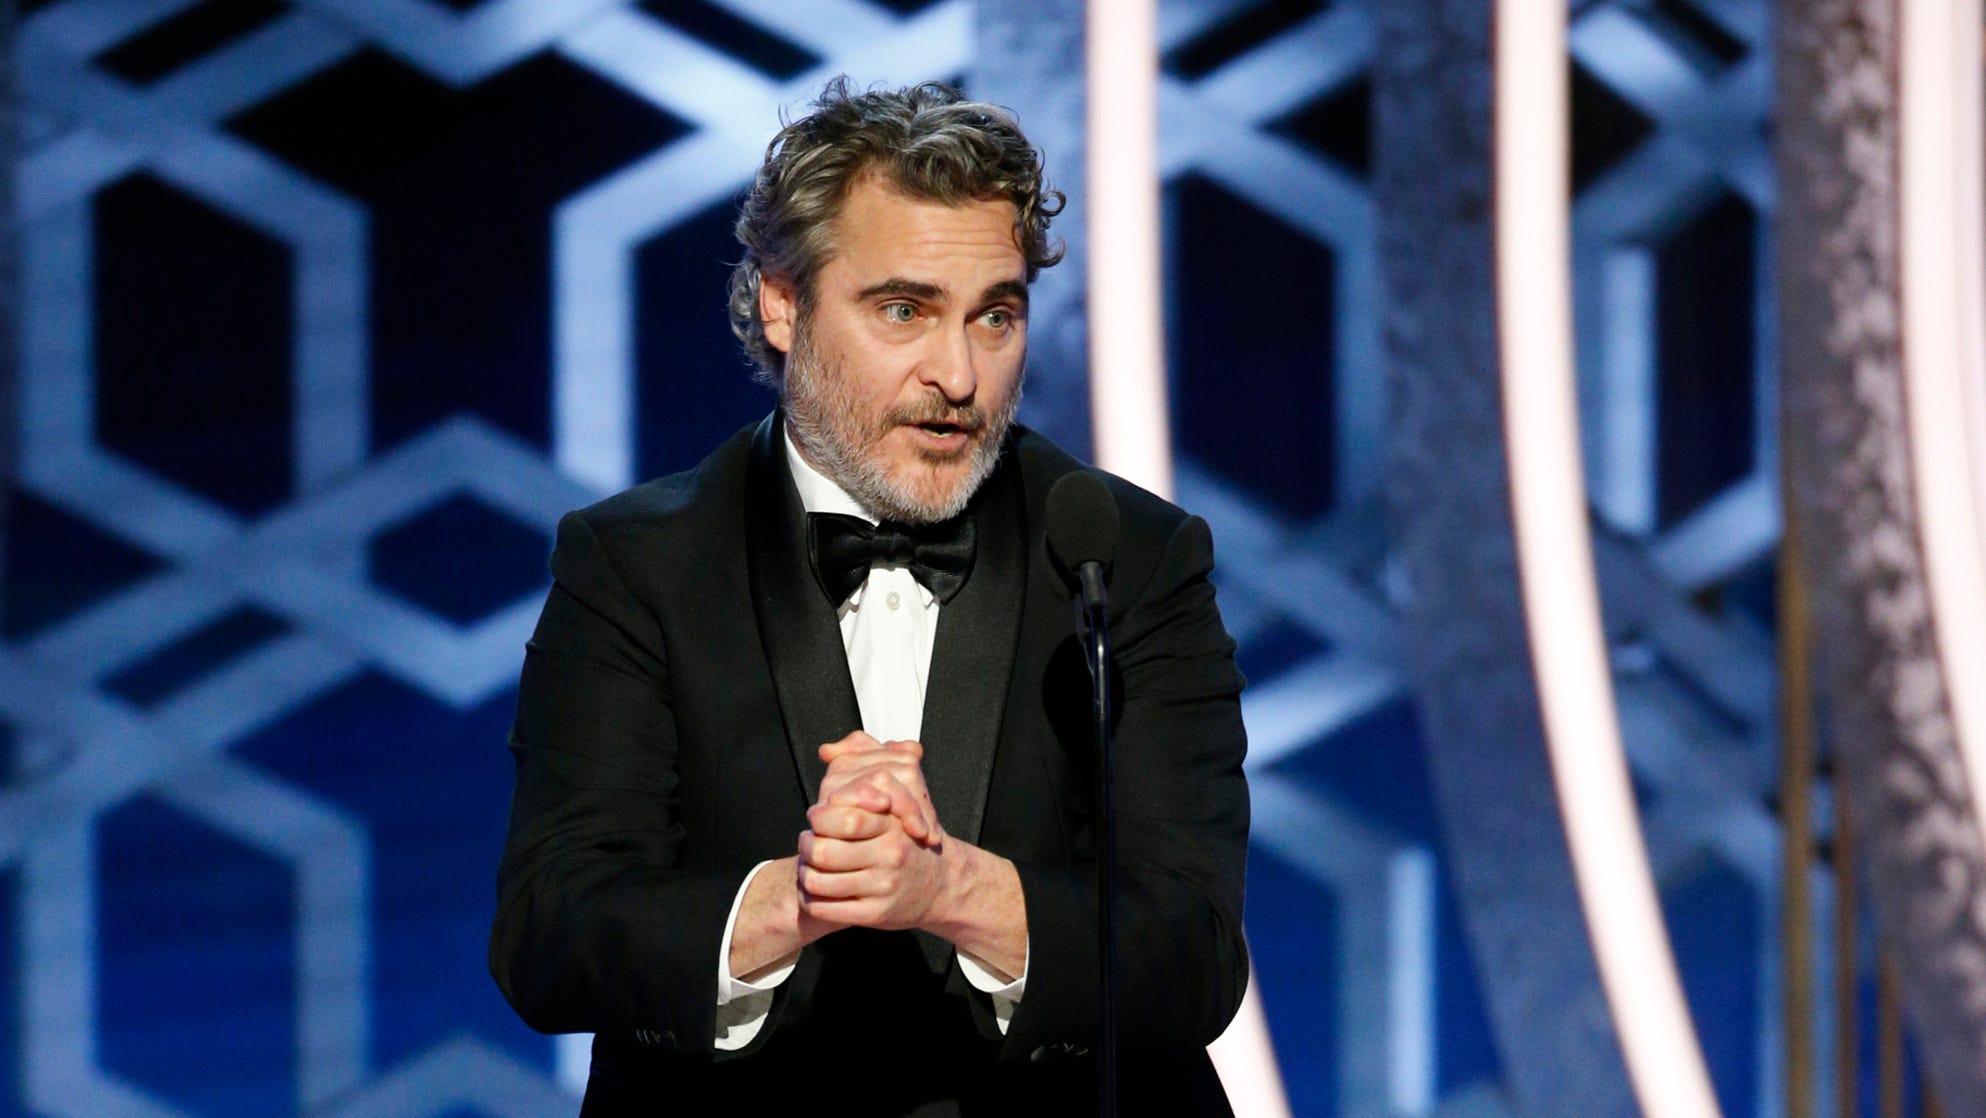 Golden Globes 2020: Joaquin Phoenix speech turns heads, confuses